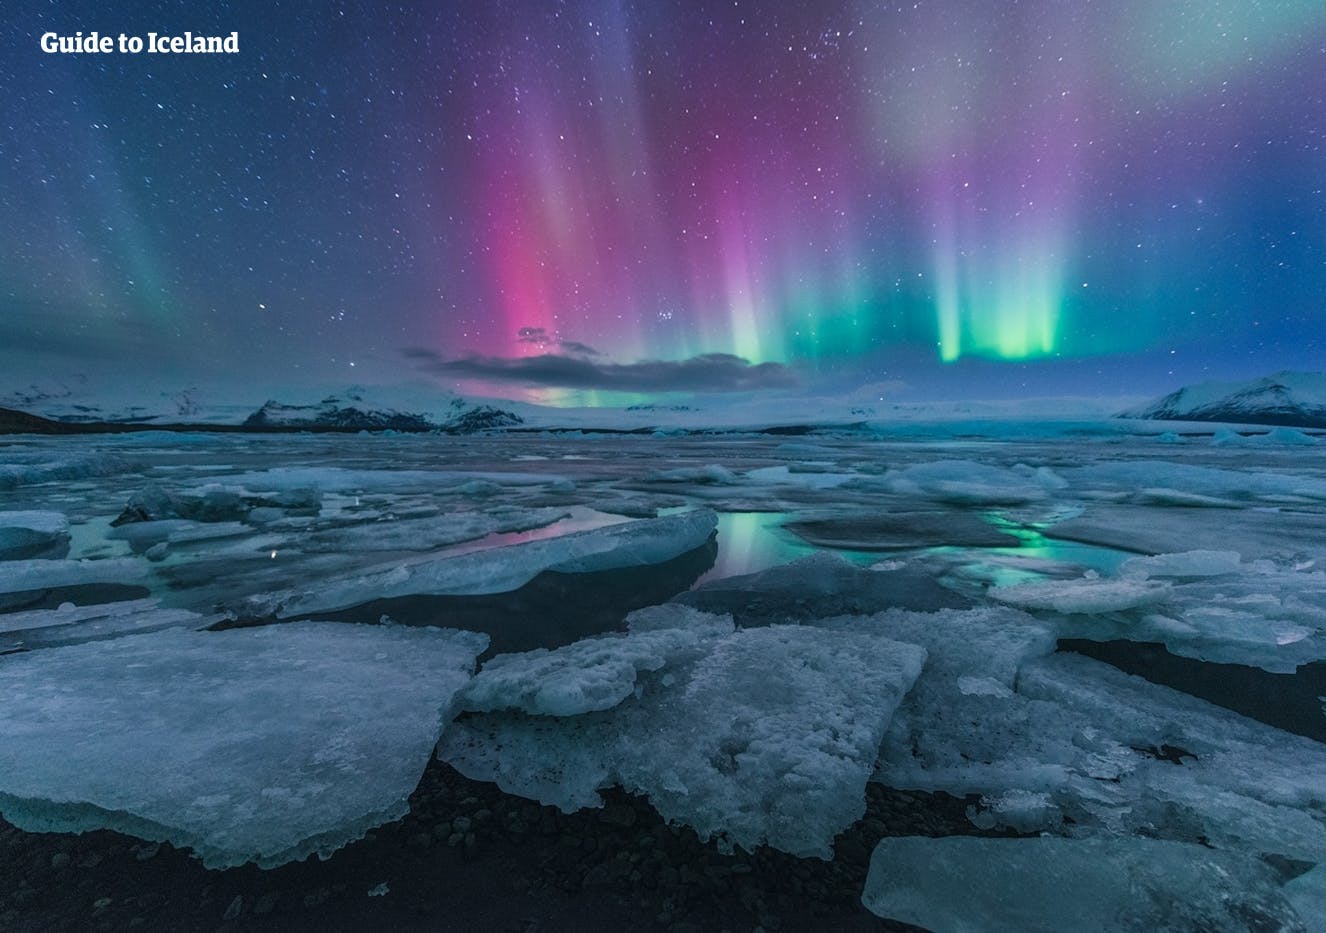 Perhaps you'll see the Northern Lights dancing over Jökulsárlón glacier lagoon on this budget winter tour.